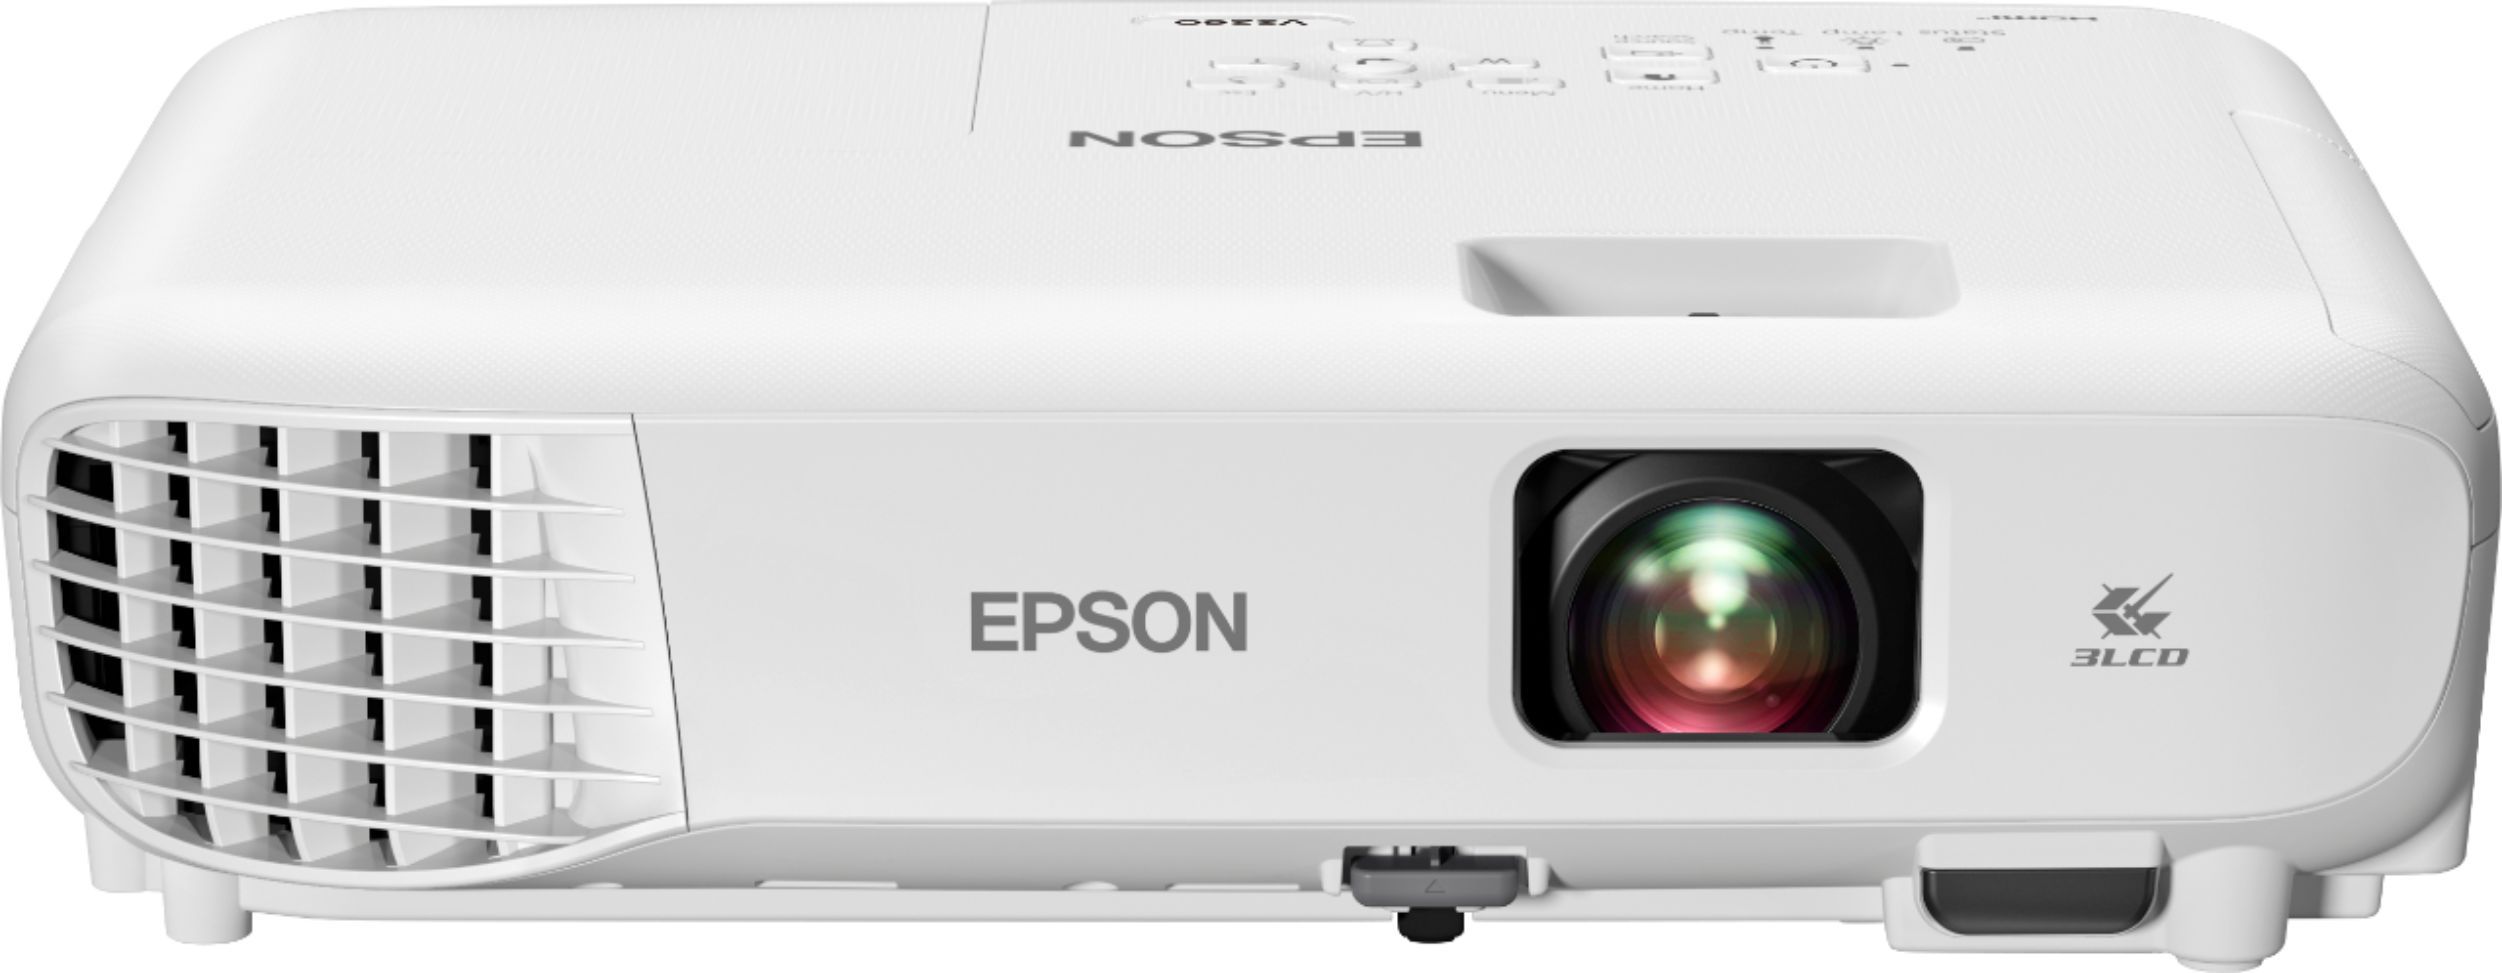 Epson VS260 XGA (1024 x 768) 3LCD Projector White V11H971220 - Best Buy | Best Buy U.S.